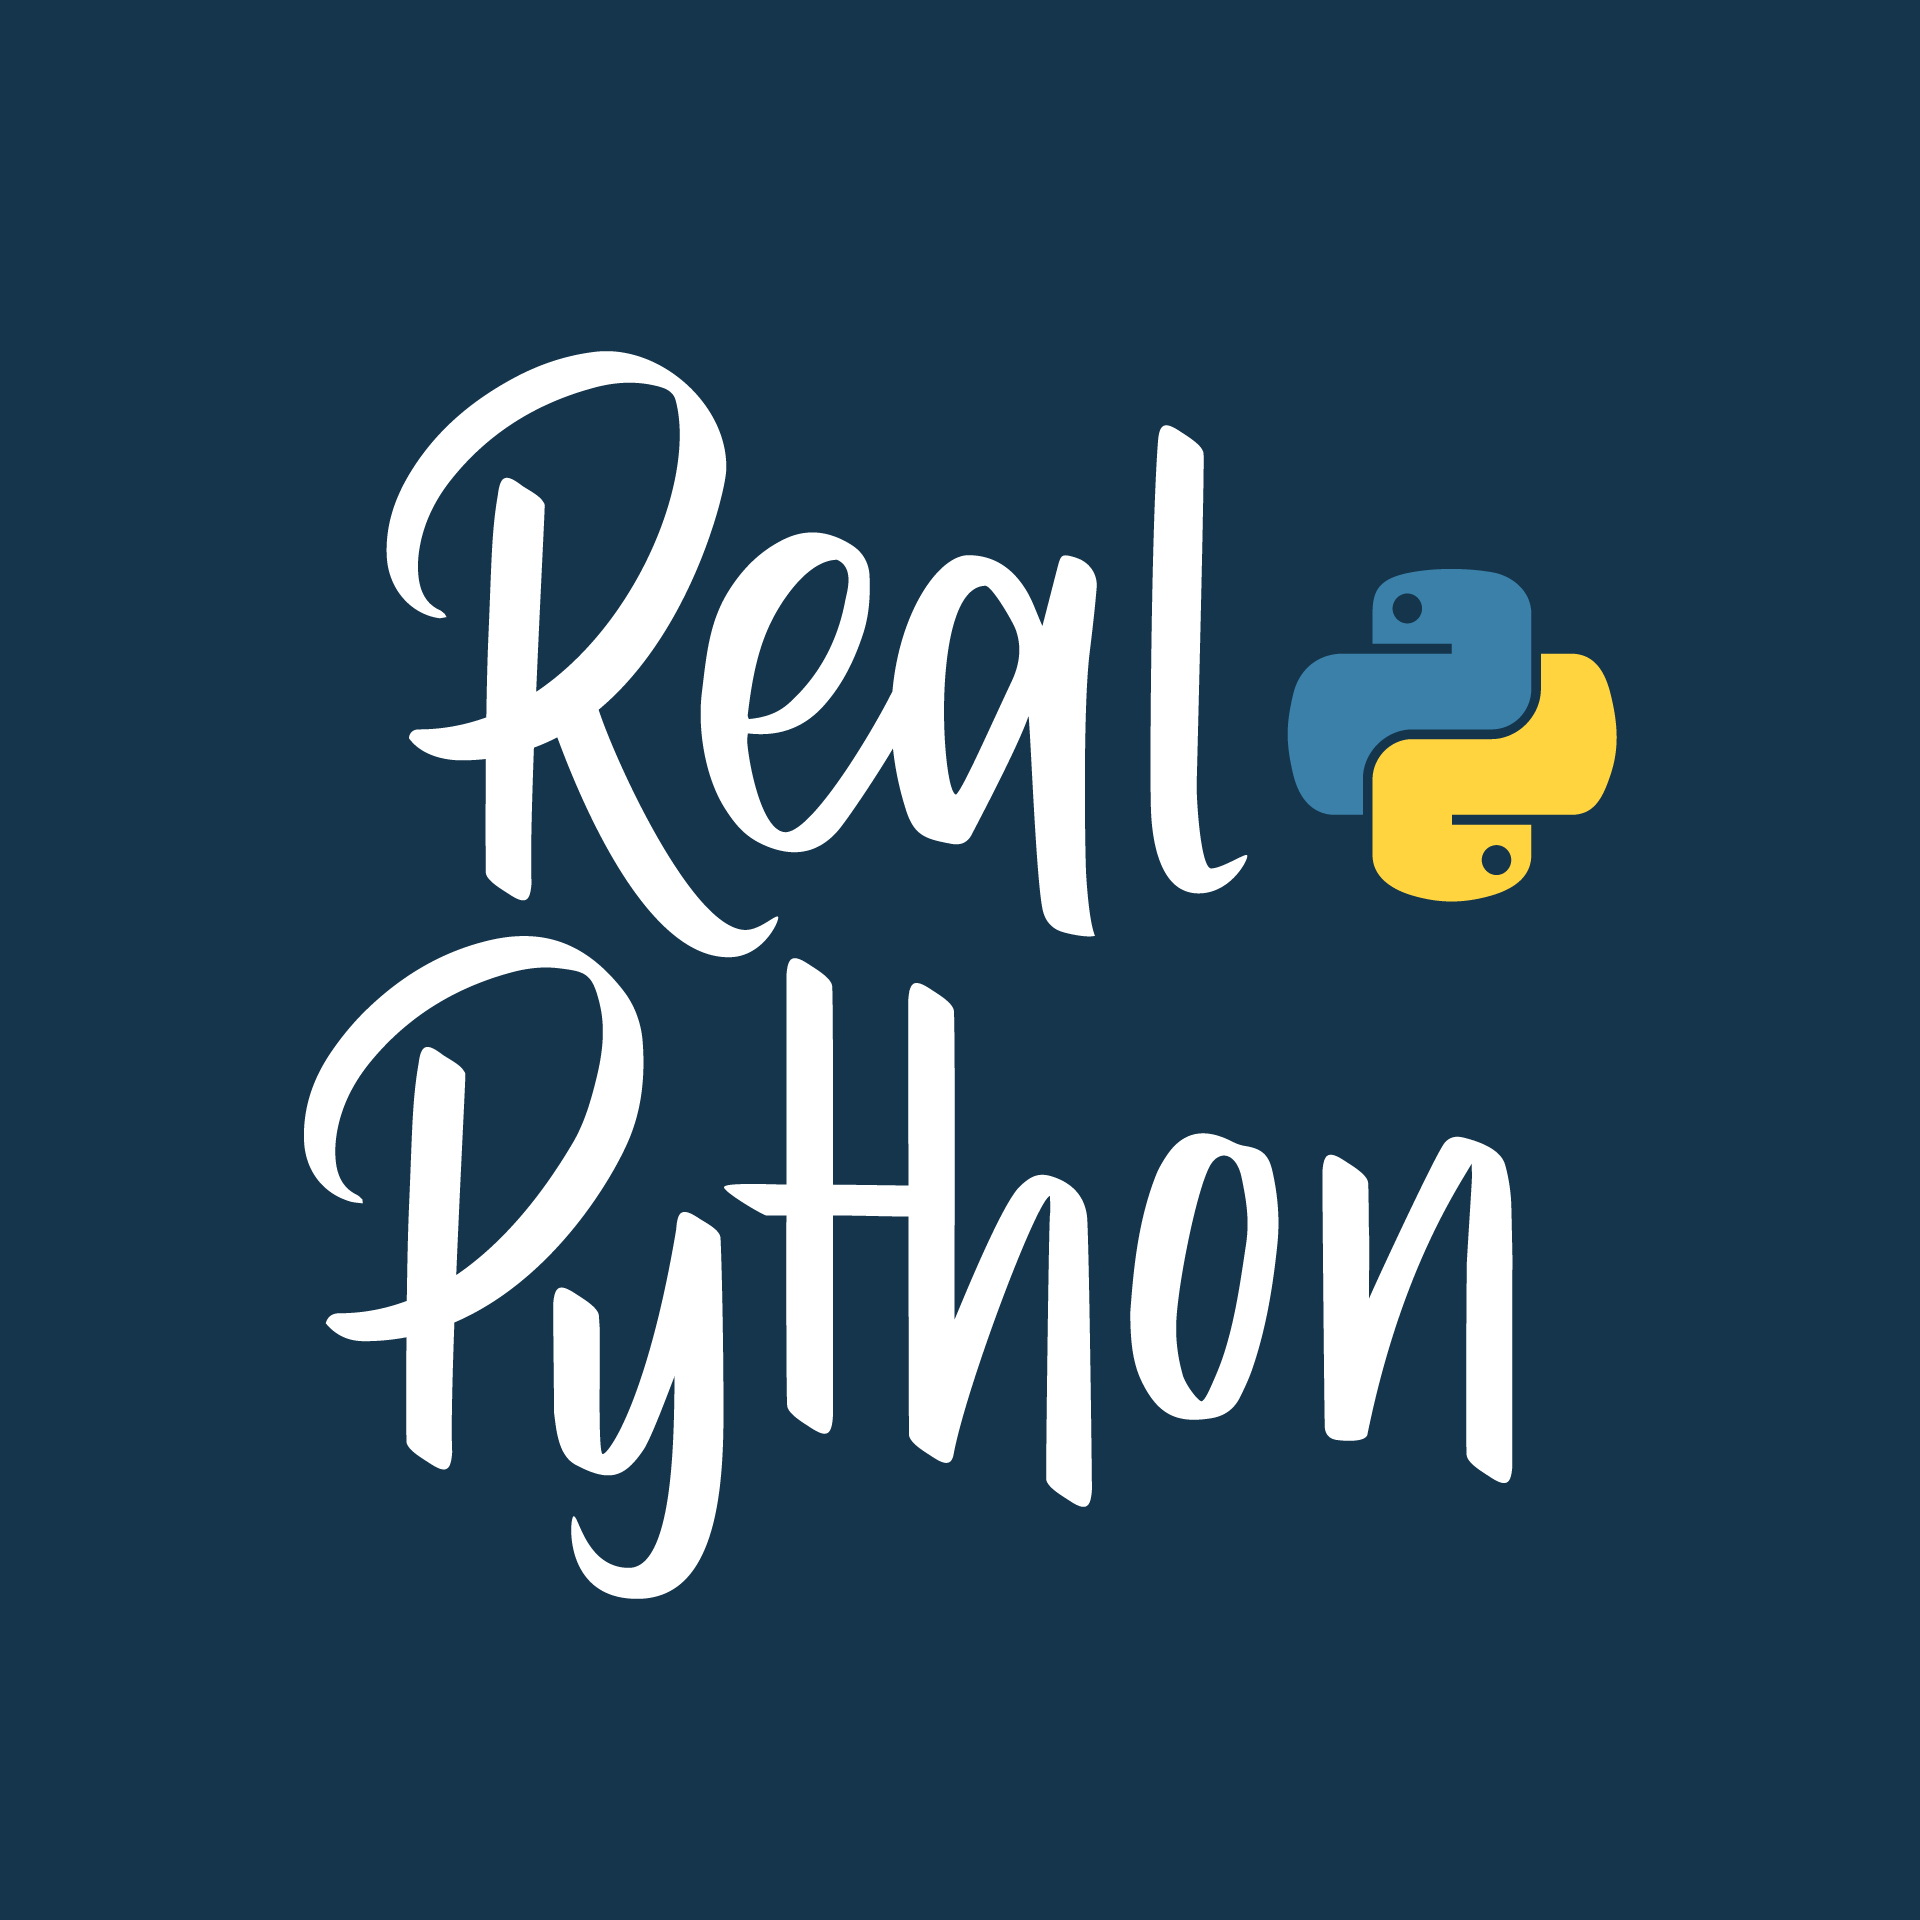 The Real Python Podcast logo